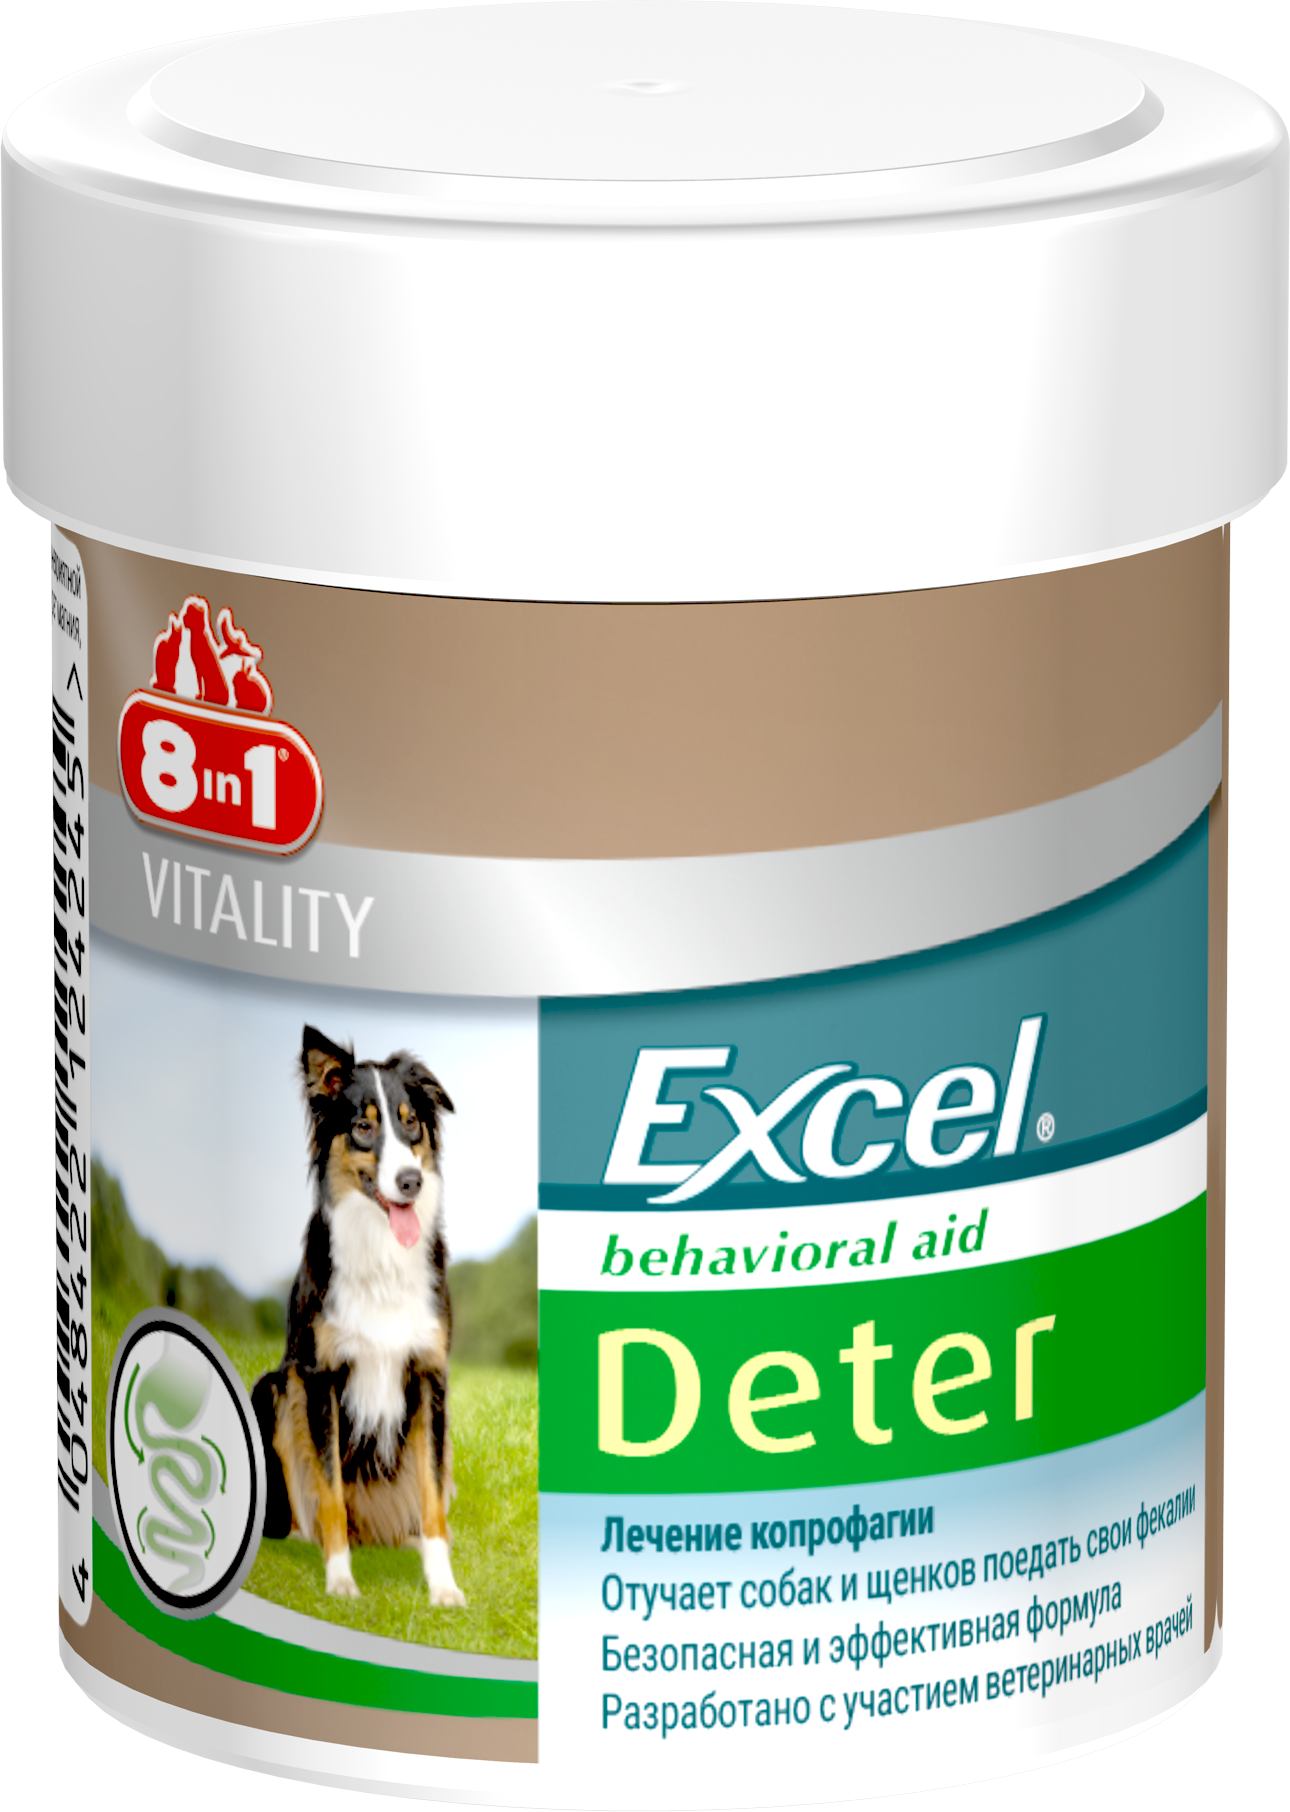 Таблетки для собак от копрофагии 8in1 Excel Deter, 100 шт. (661022 /124245) - фото 1